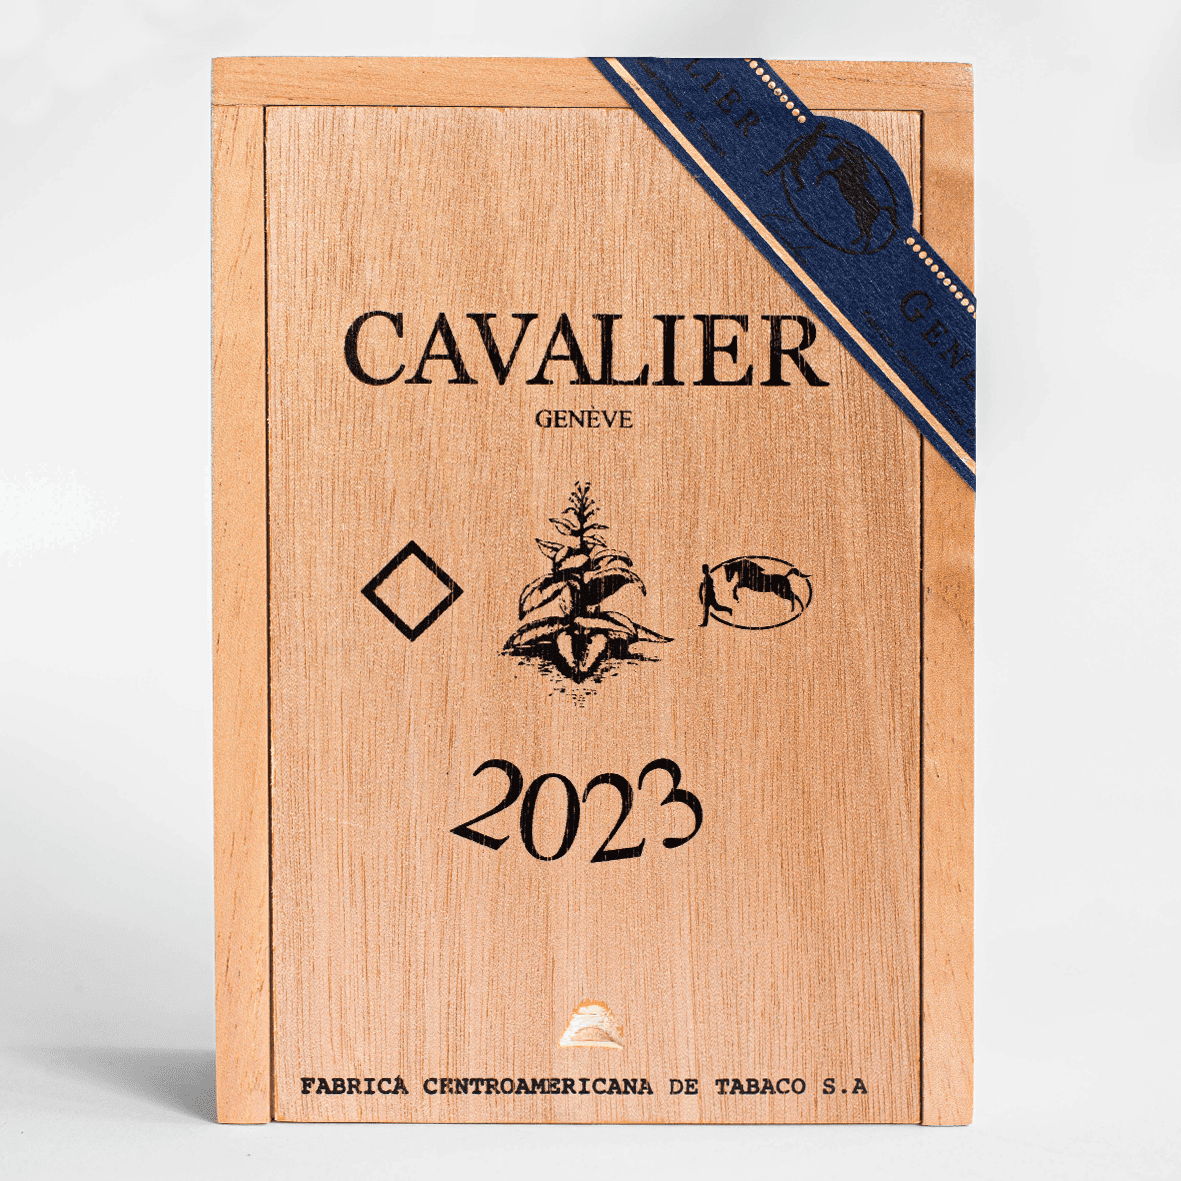 Cavalier LE2023 Toro bx10